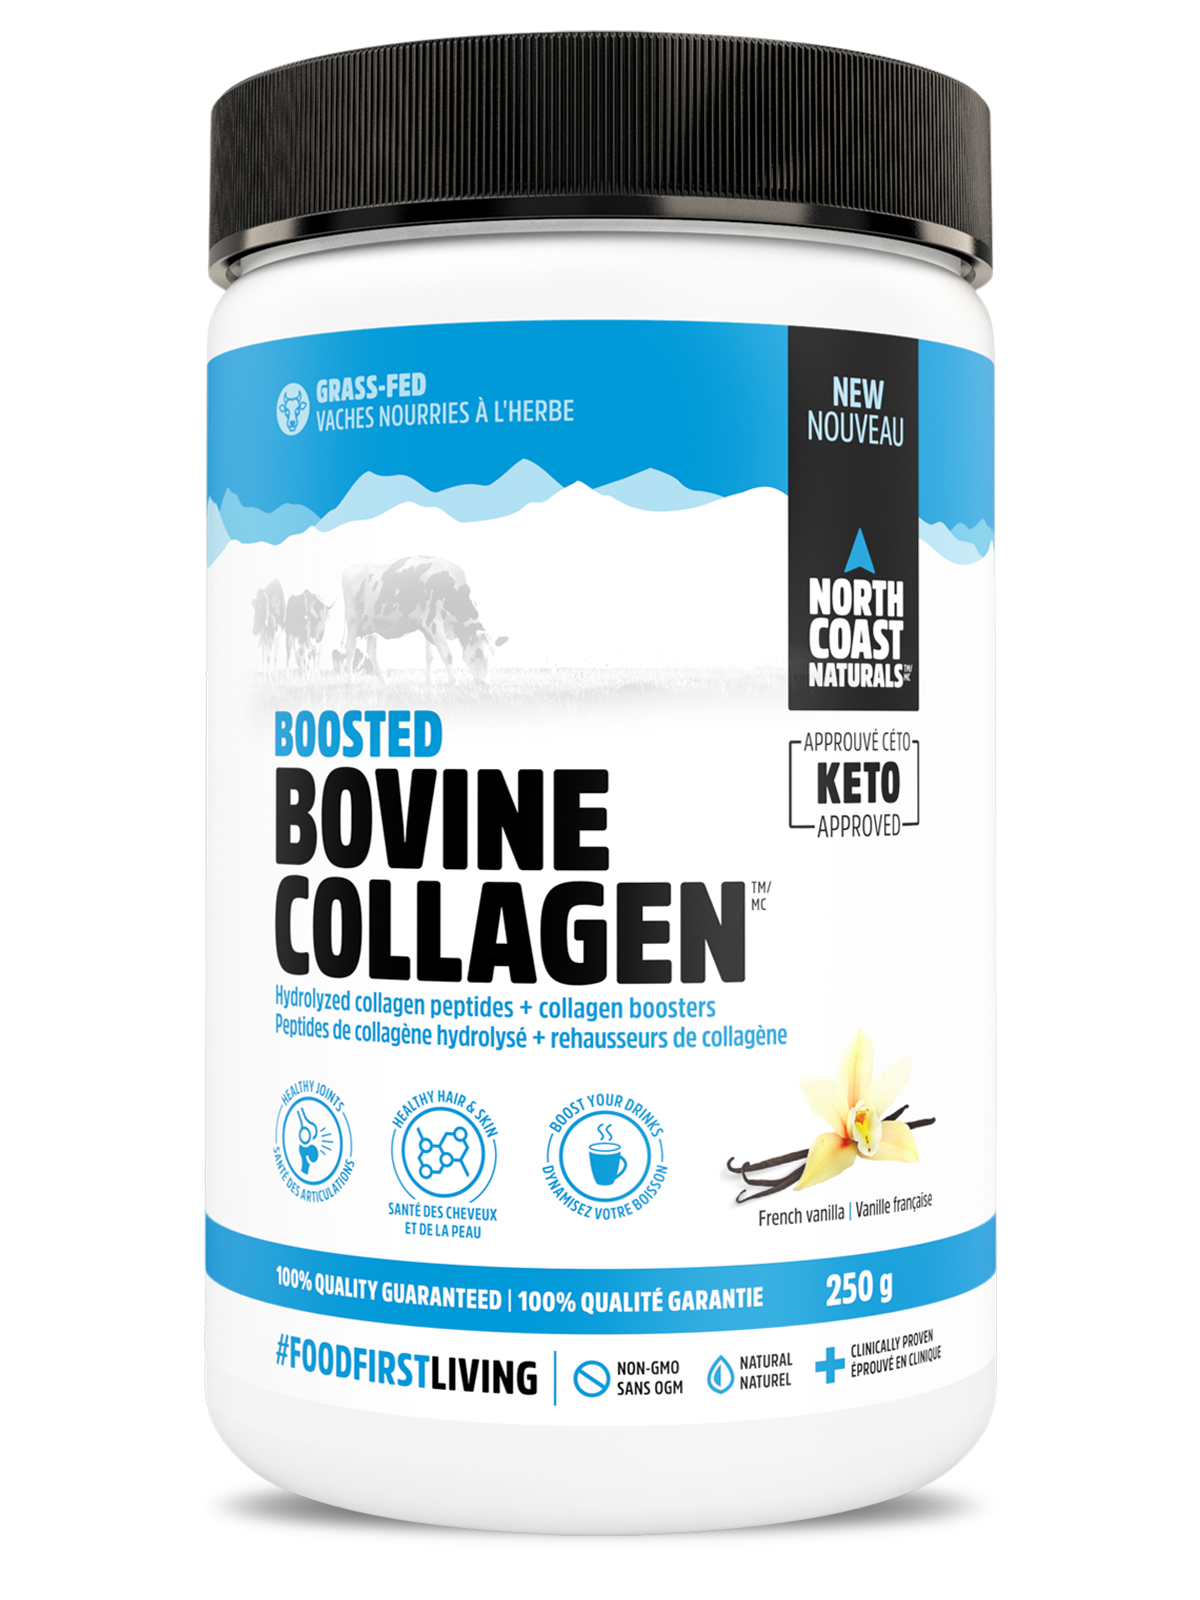 North Coast Naturals Boosted Bovine Collagen